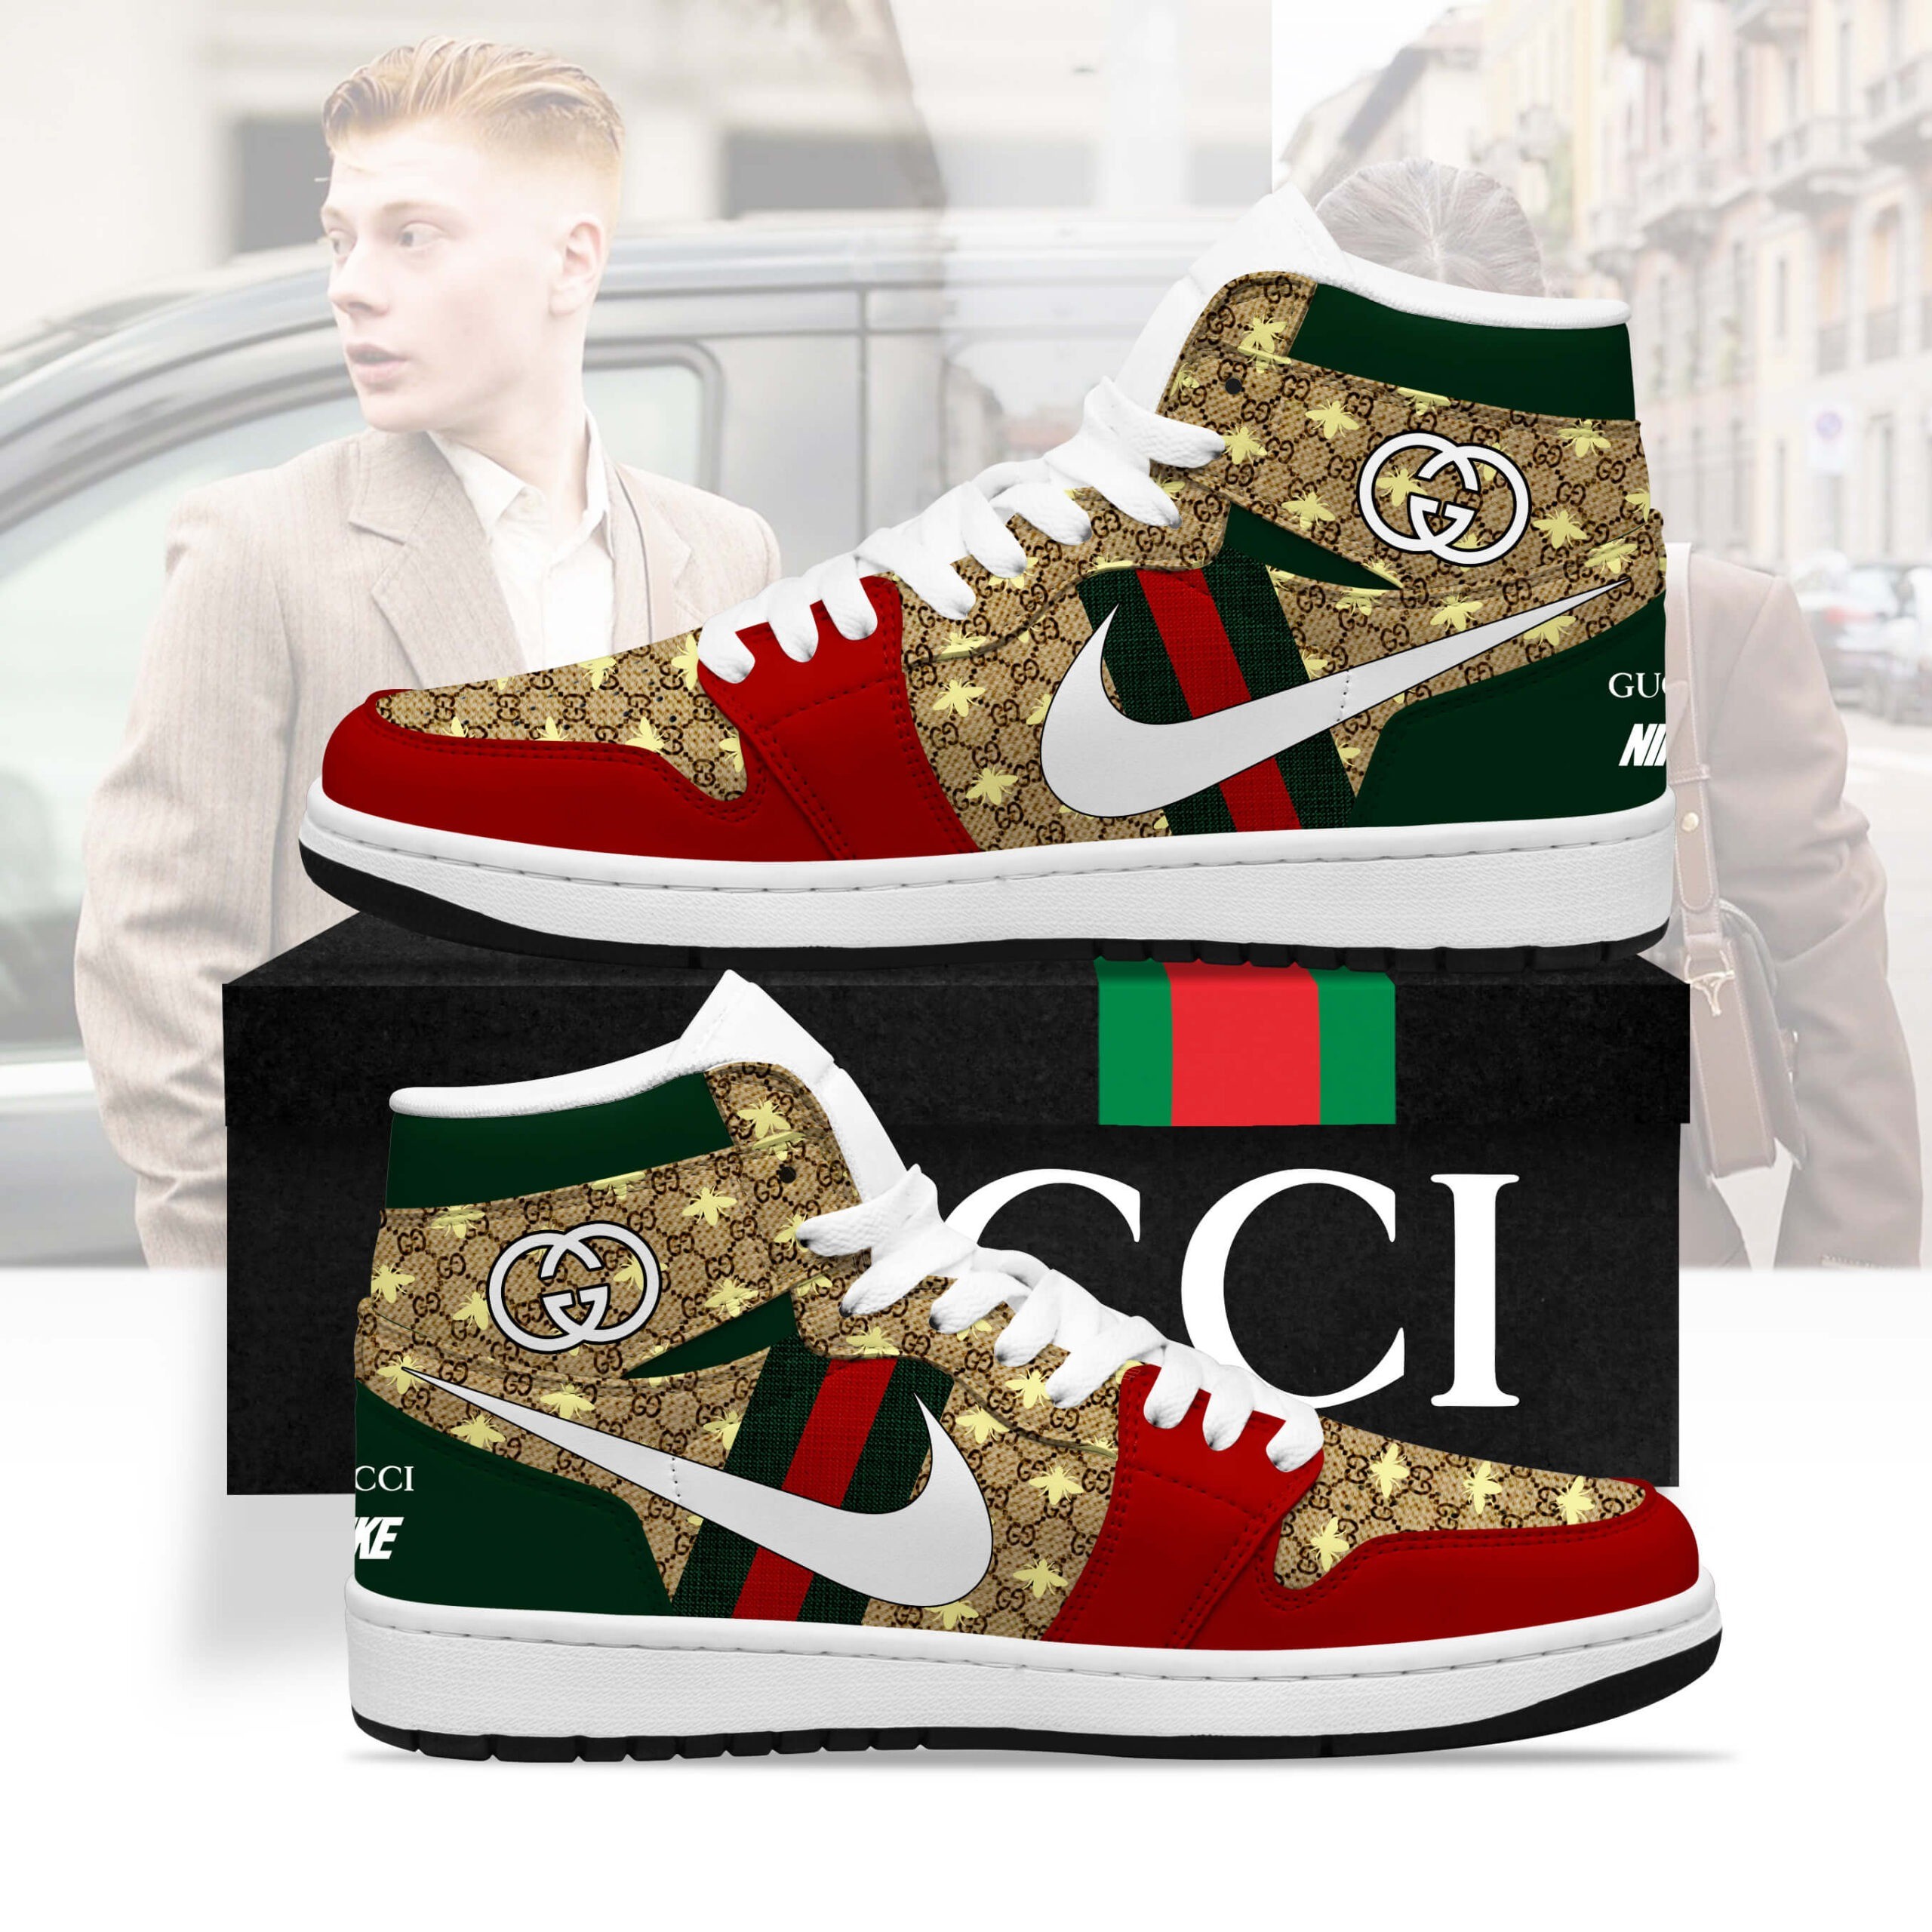 SALE] Gucci Snoopy Dab Jordan 1 High Sneaker - Luxury & Sports Store